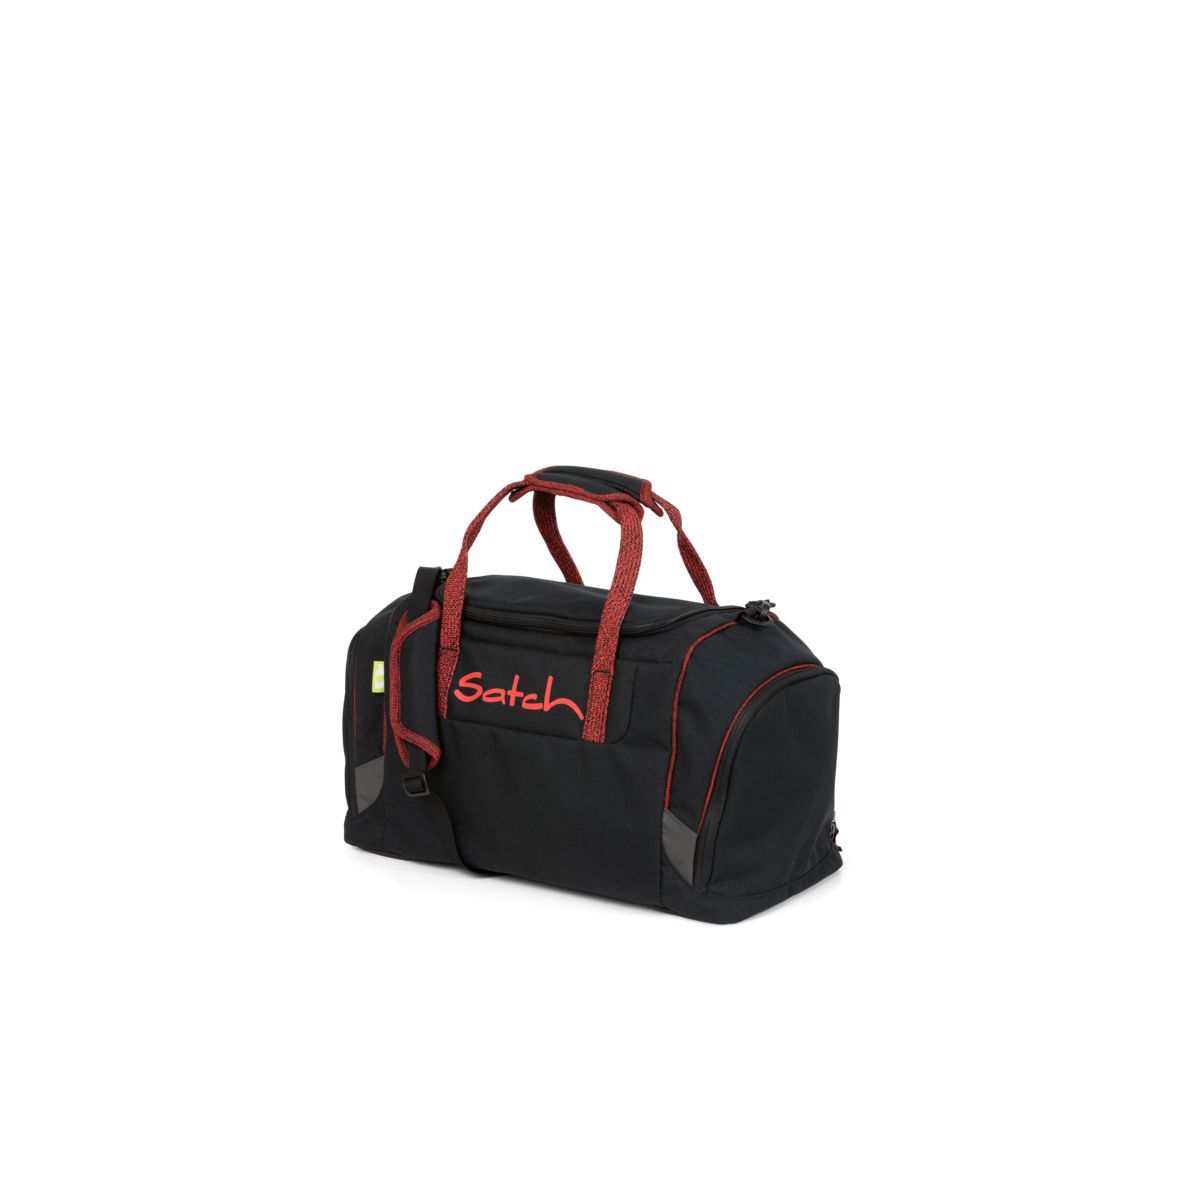 satch Duffle Bag - black, red - Black Volcano